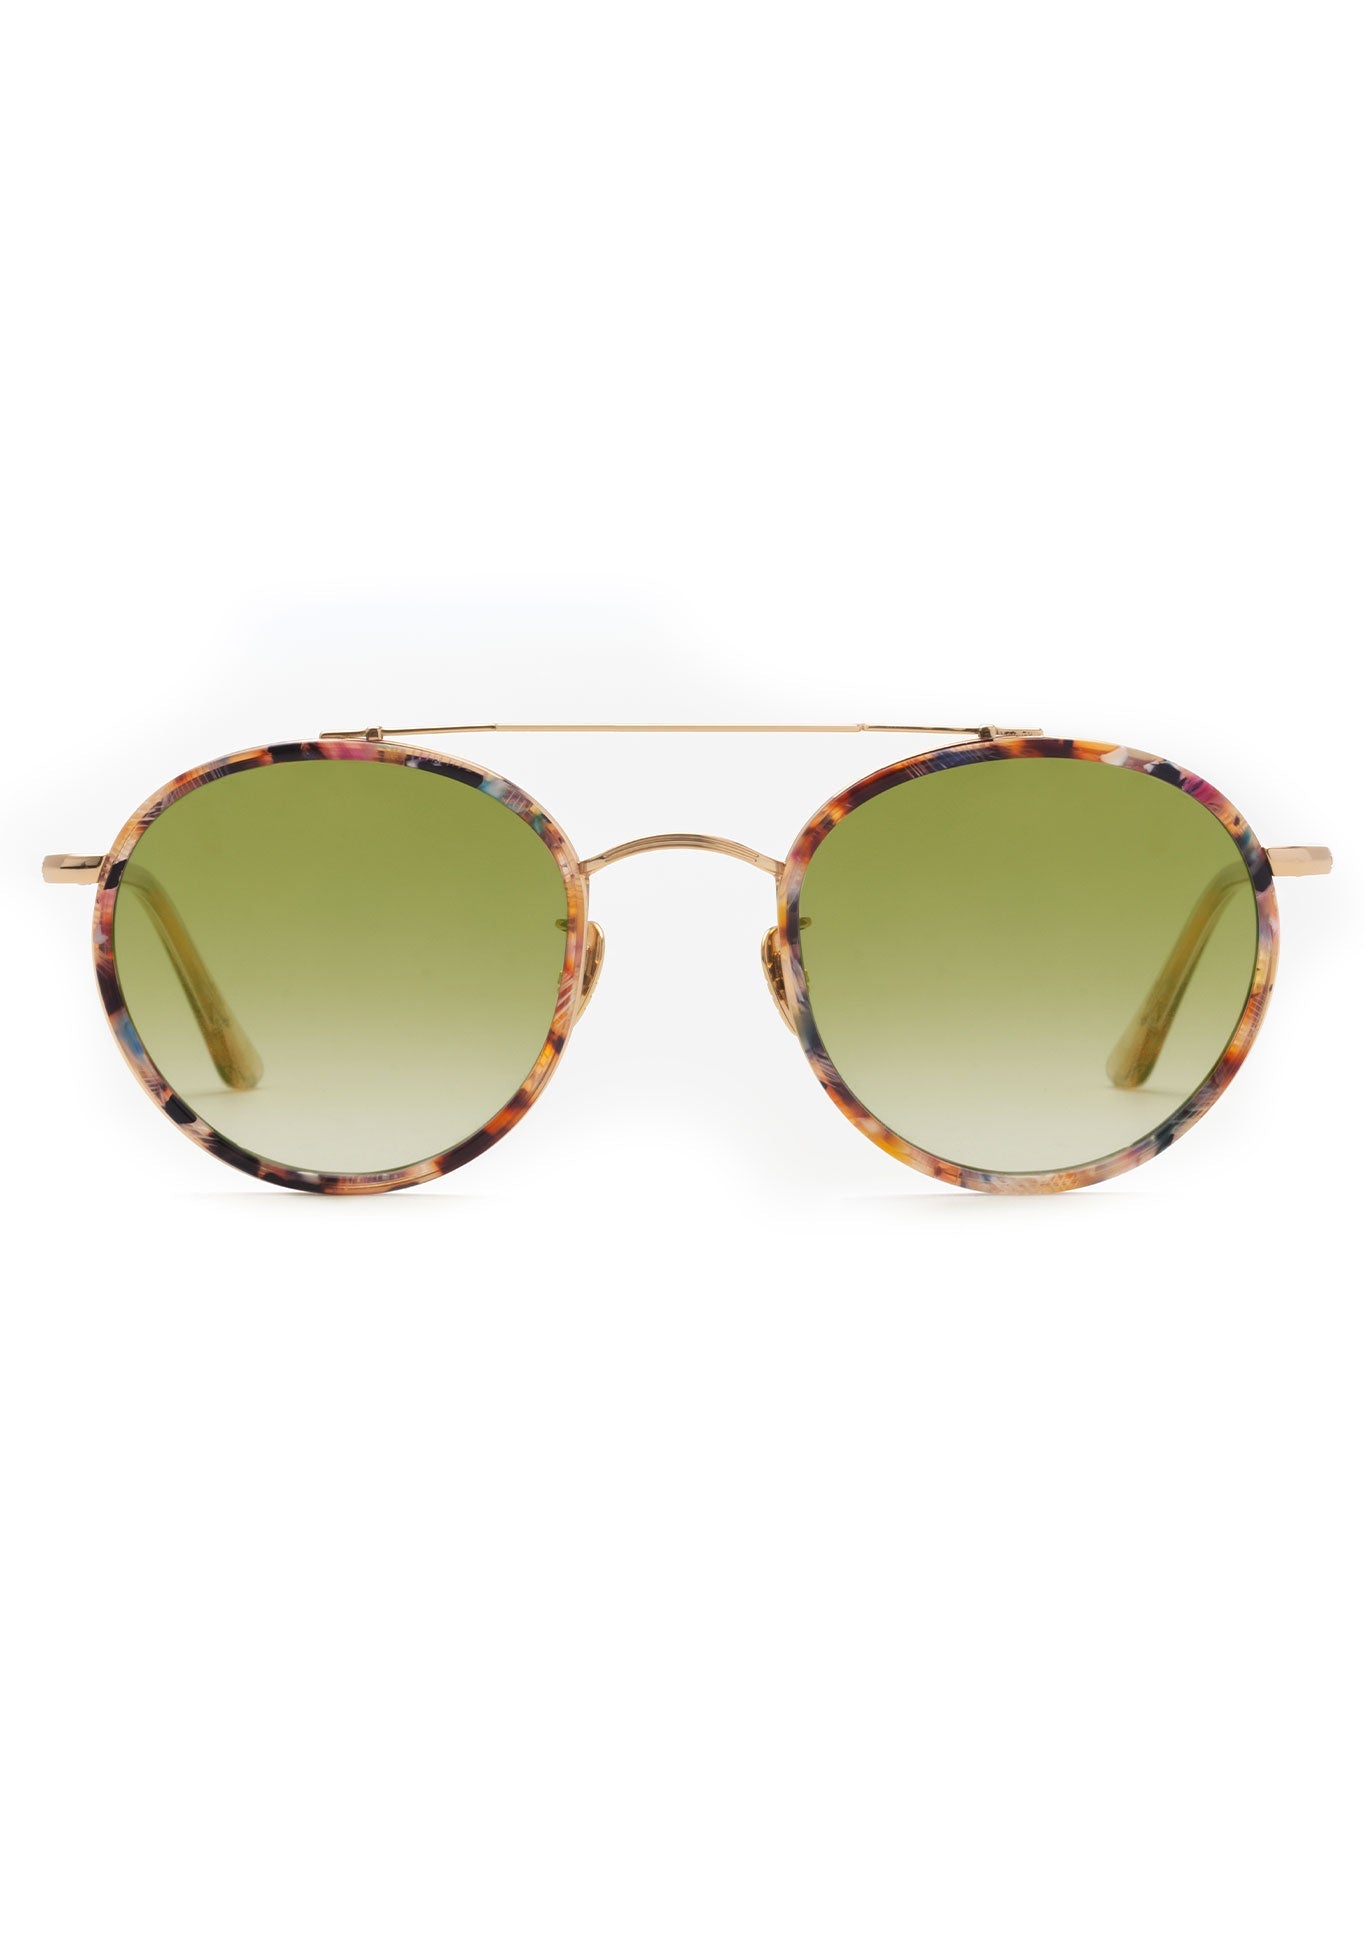 KREWE SUNGLASSES - PORTER | 18K Titanium + Capri + Petal + Custom Vanity Tint handcrafted luxury round colorful sunglasses with green tinted lenses